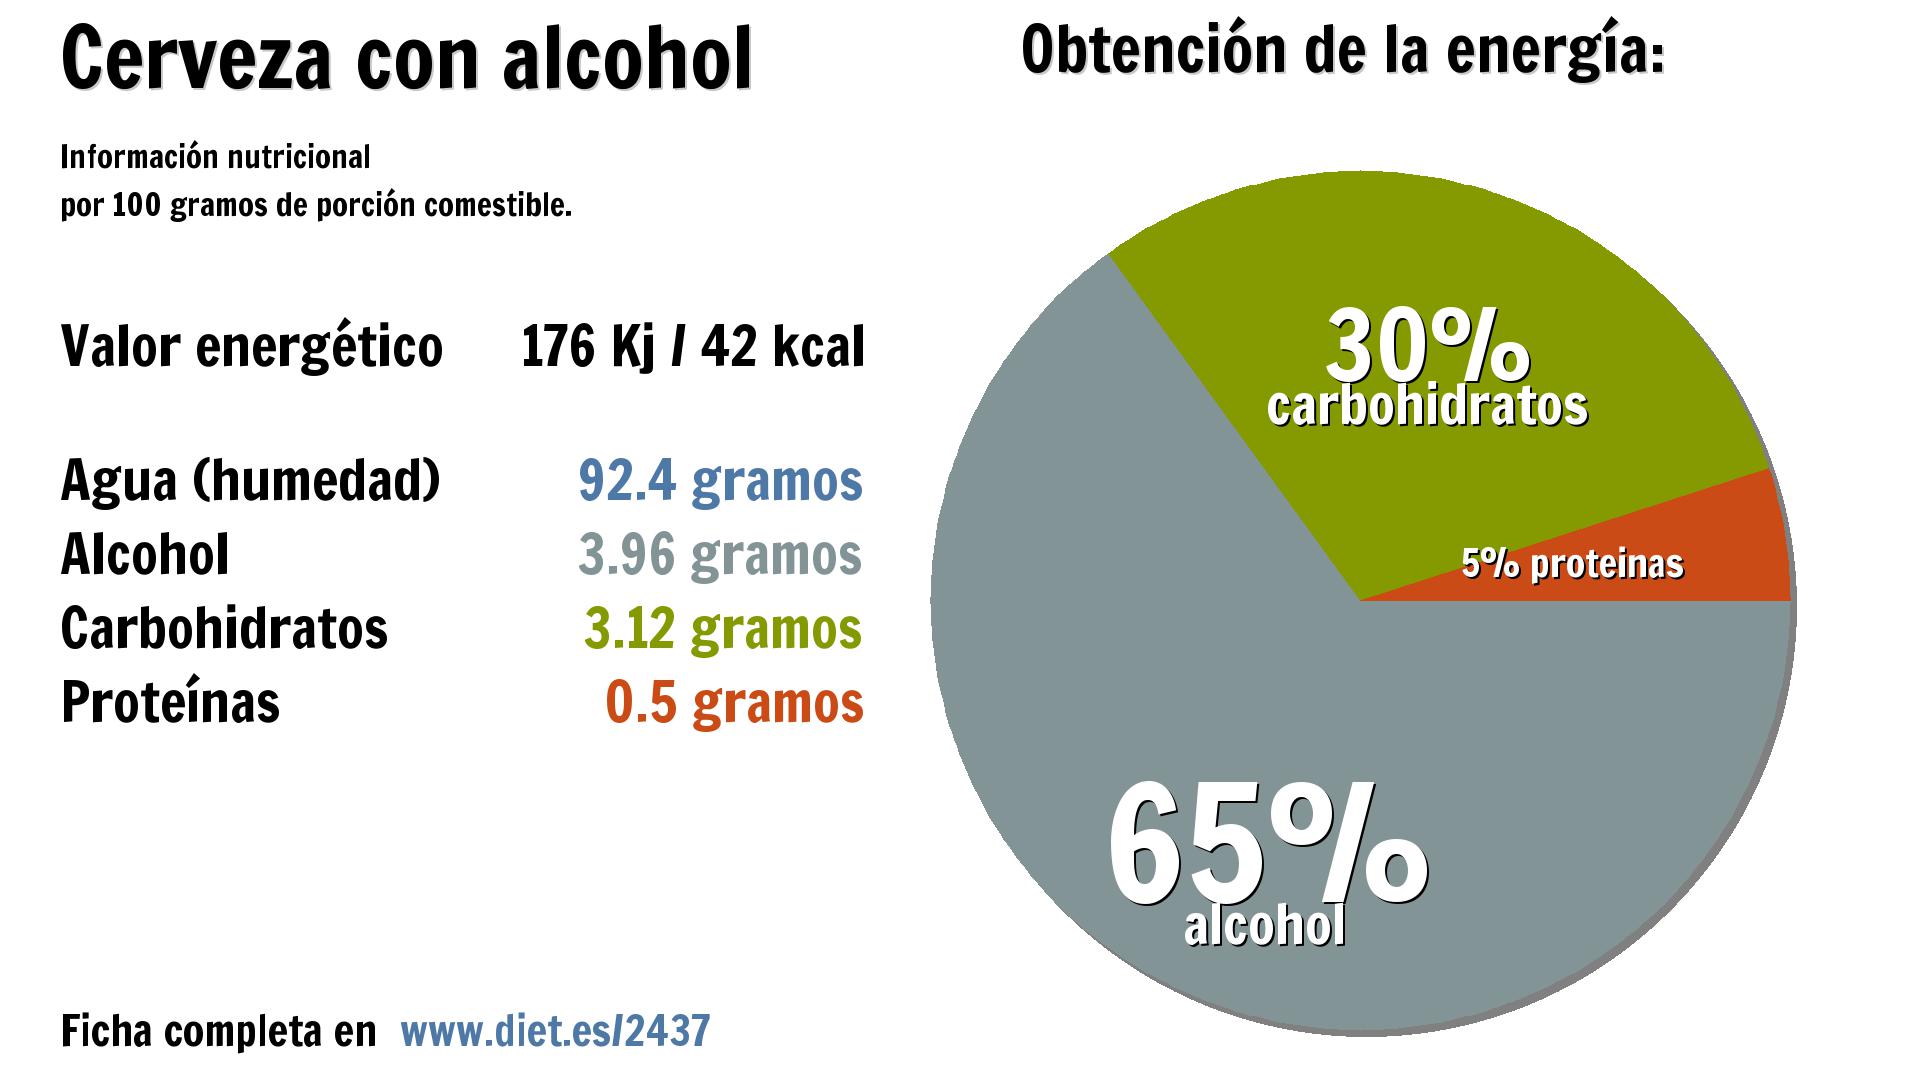 Cerveza con alcohol: energía 176 Kj, agua 92 g., alcohol 4 g., carbohidratos 3 g. y proteínas 1 g.